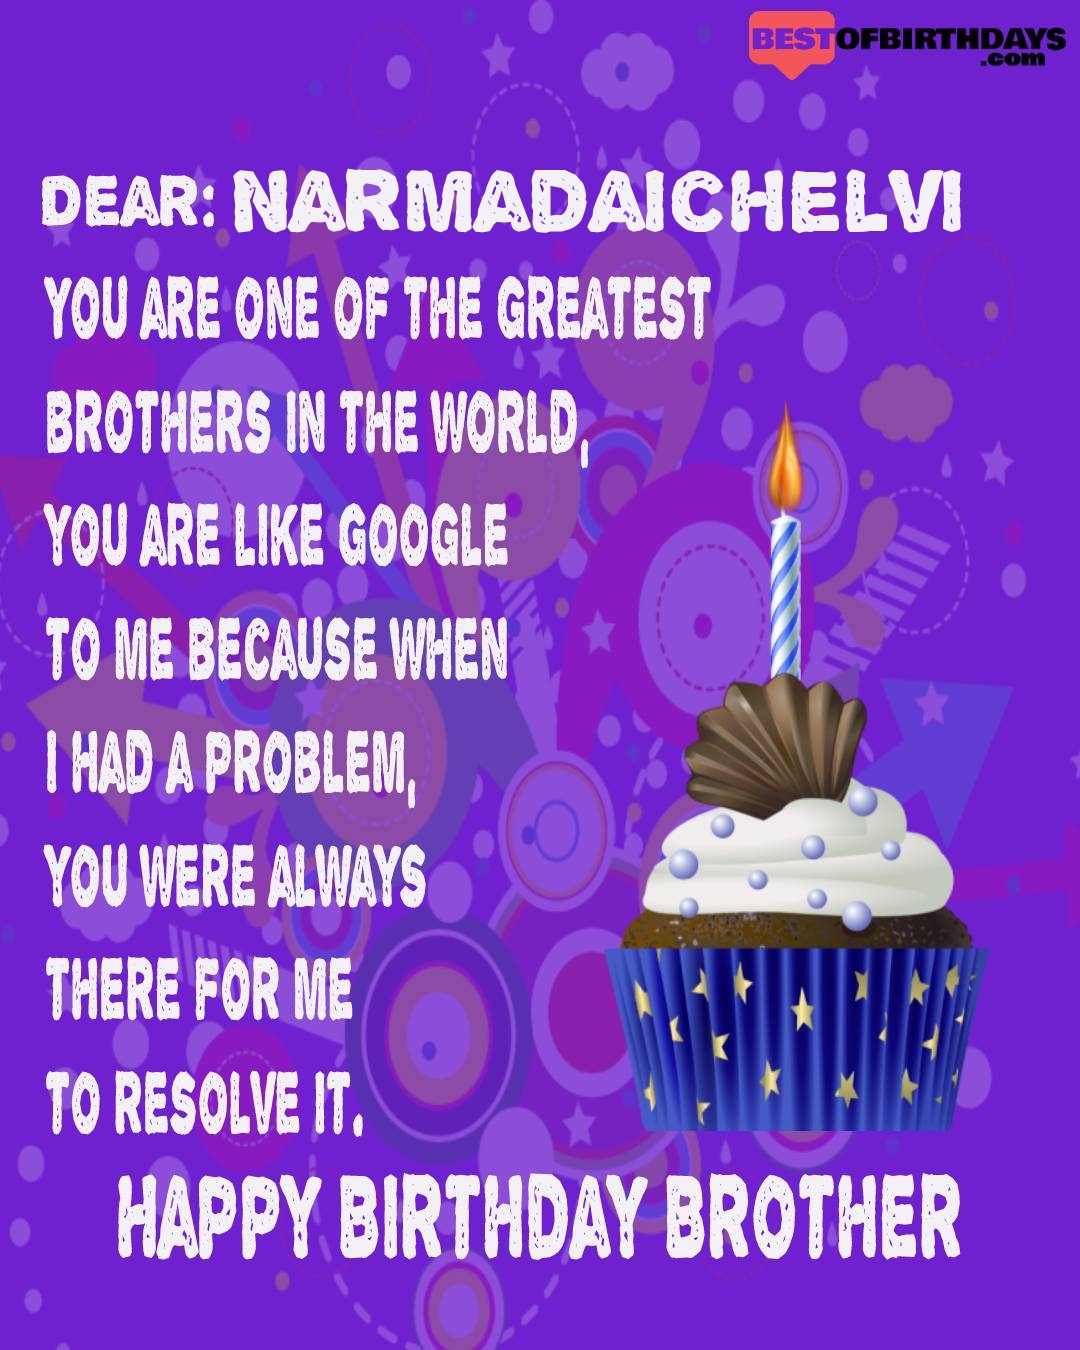 Happy birthday narmadaichelvi bhai brother bro